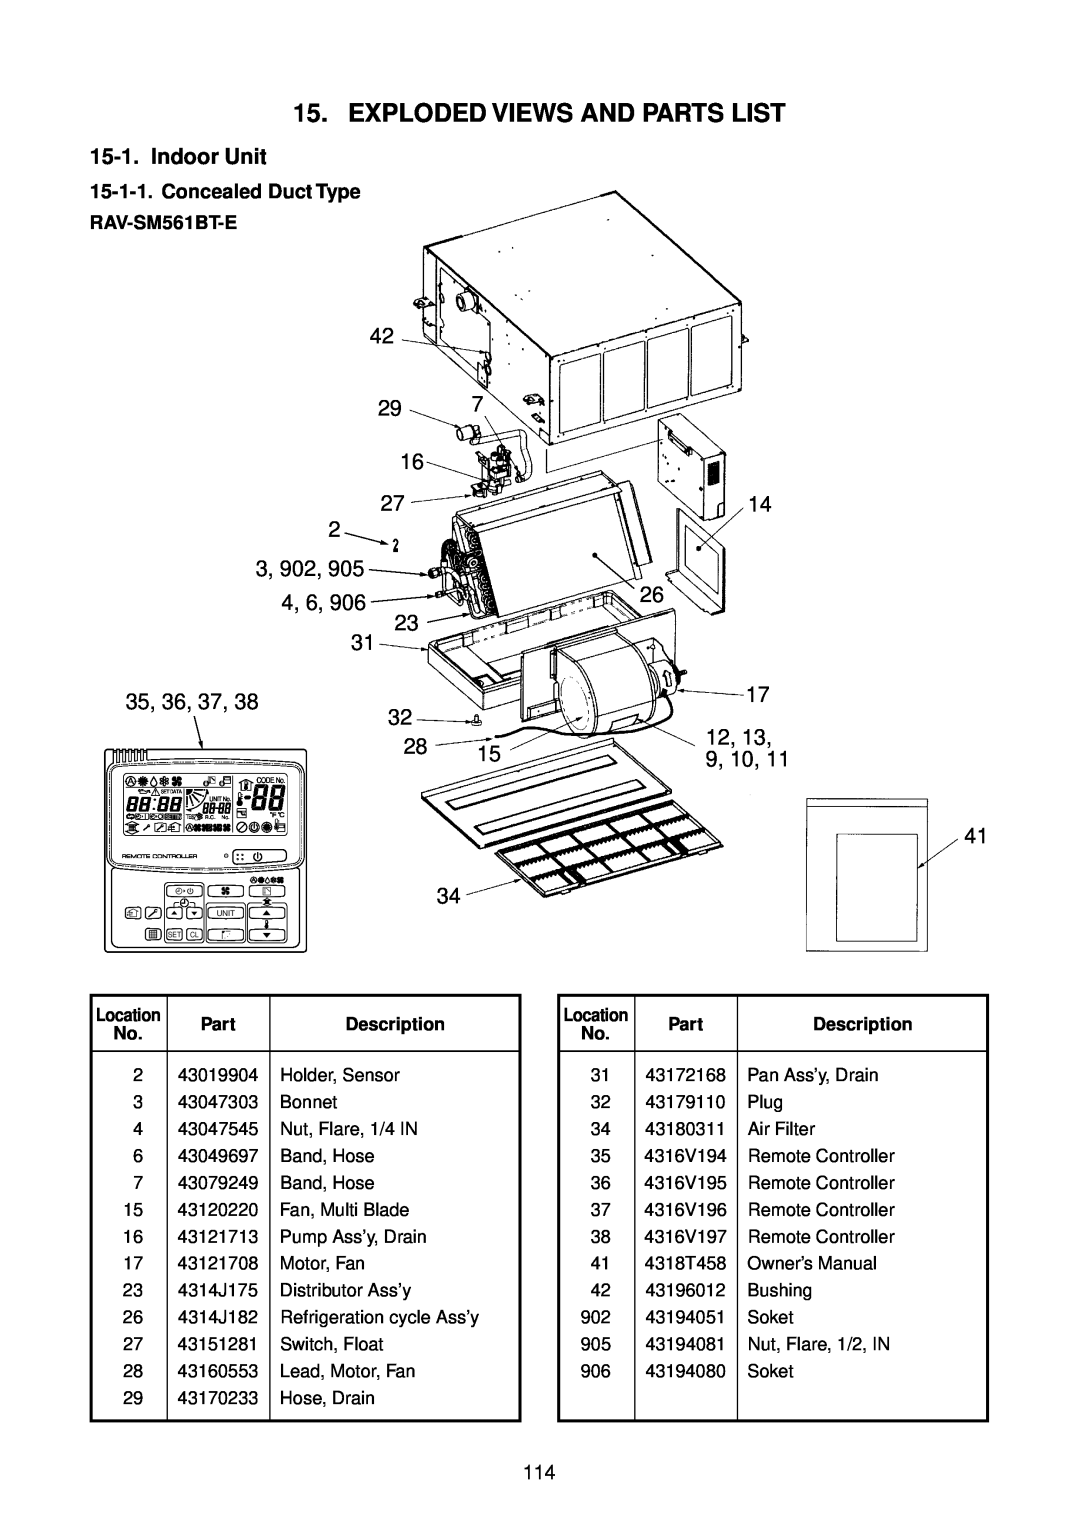 Toshiba RAV-SM1100AT-E Exploded Views And Parts List, 42 29 16 27 2 3, 902, 905 4, 6, 23 31 35, 36, 37, 32 28, Description 